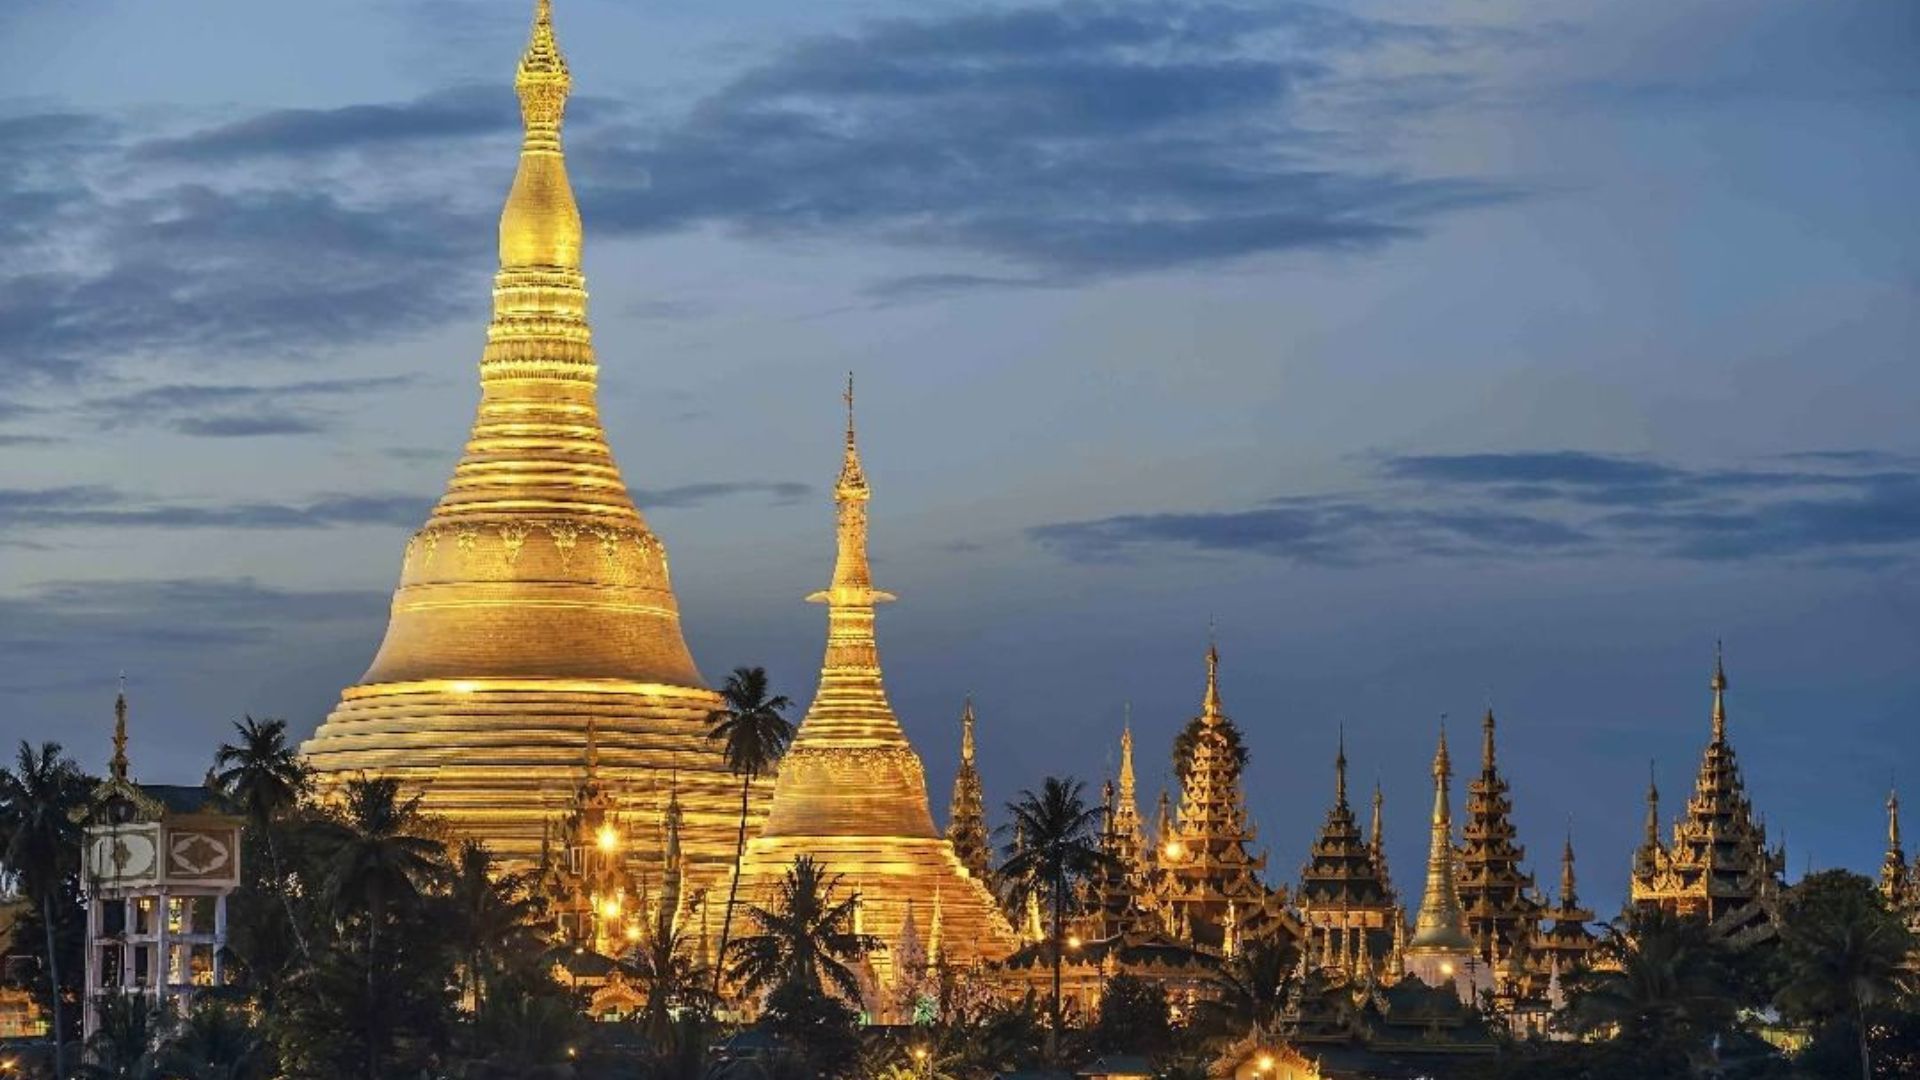 Myanmar tourist visa